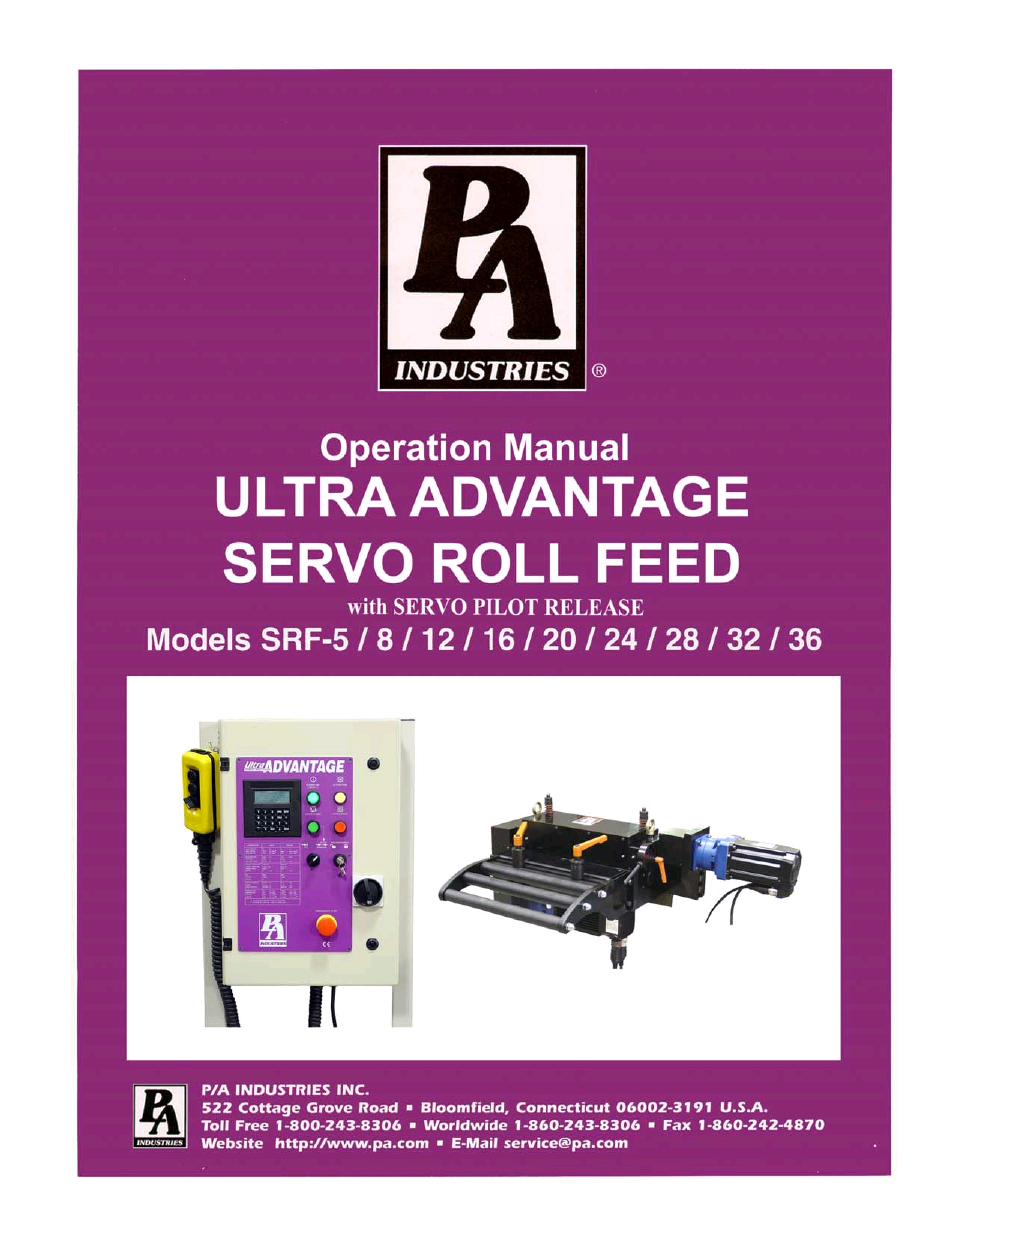 Advantage Servo Roll Feed SRF-5/8/12/16/20/24/28/32/36 with Servo Pilot Release - Operation Manual